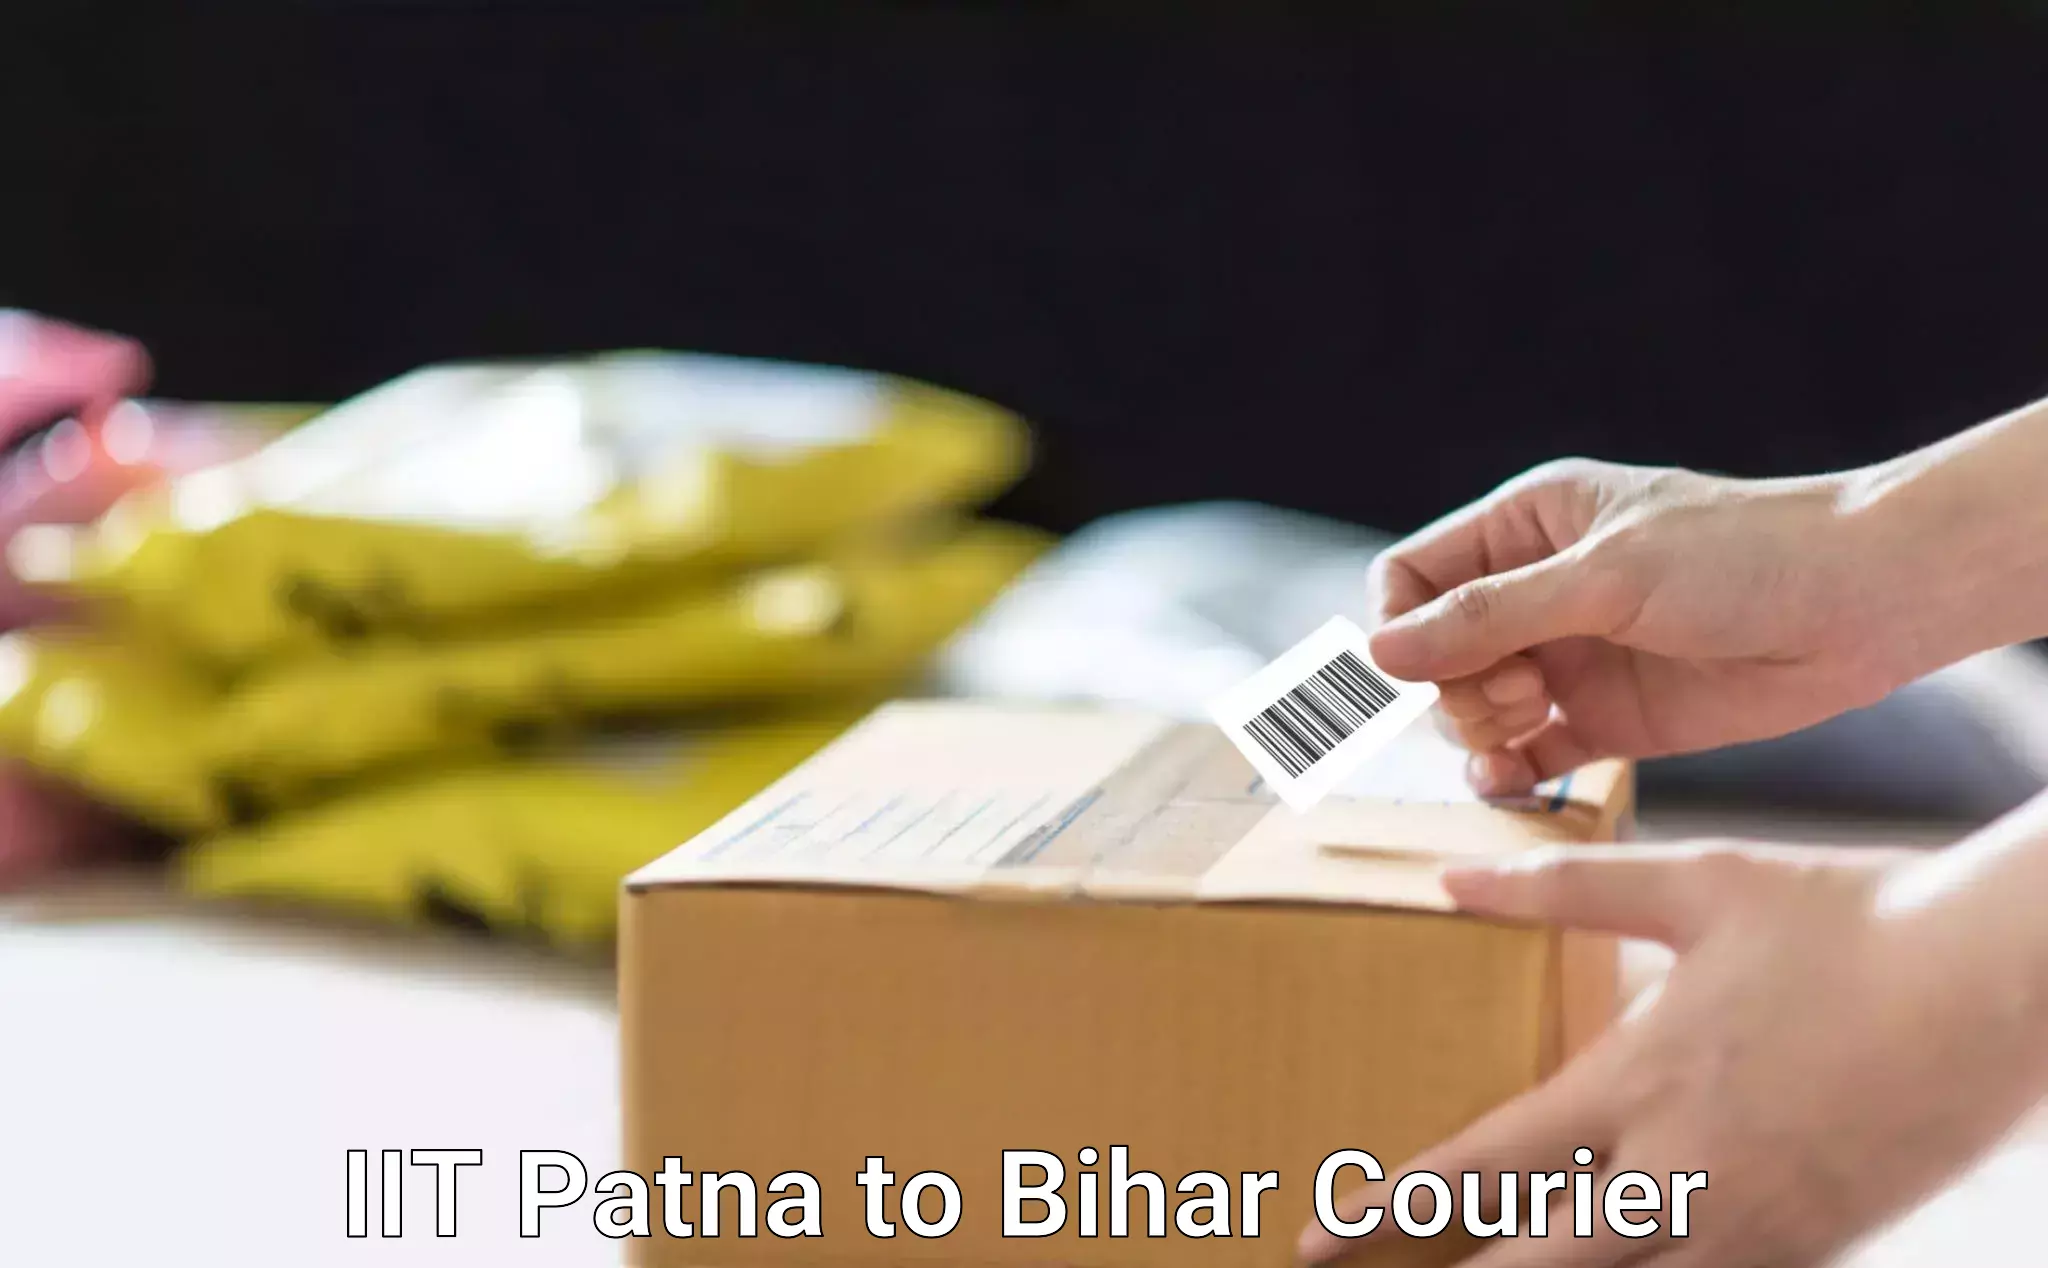 Professional movers IIT Patna to Bihar